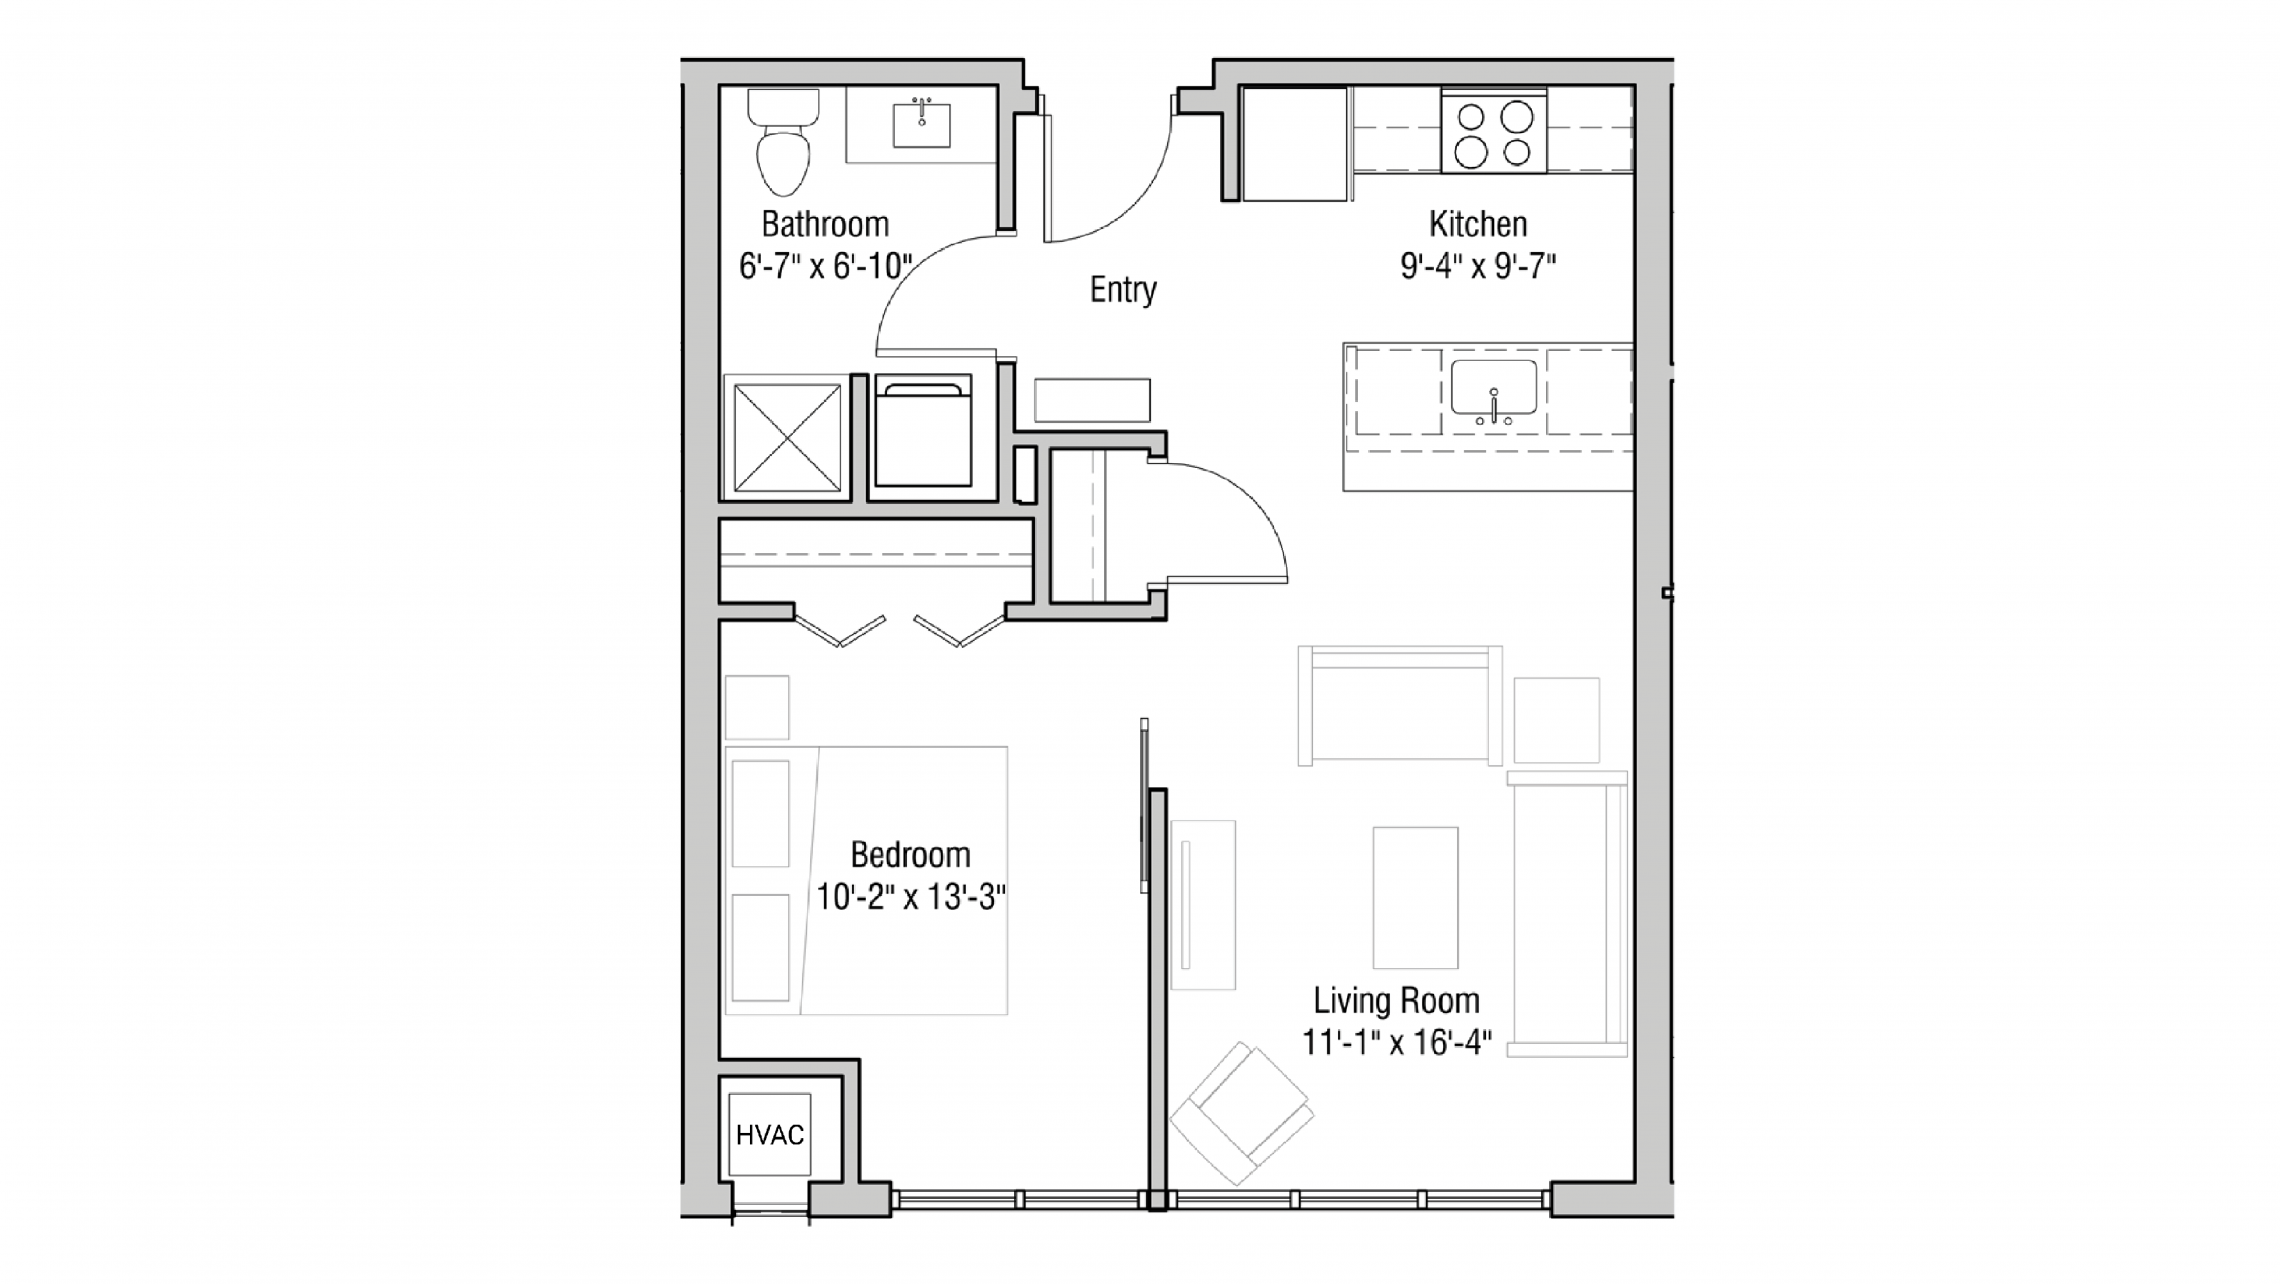 ULI Quarter Row 411 - One Bedroom, One Bathroom